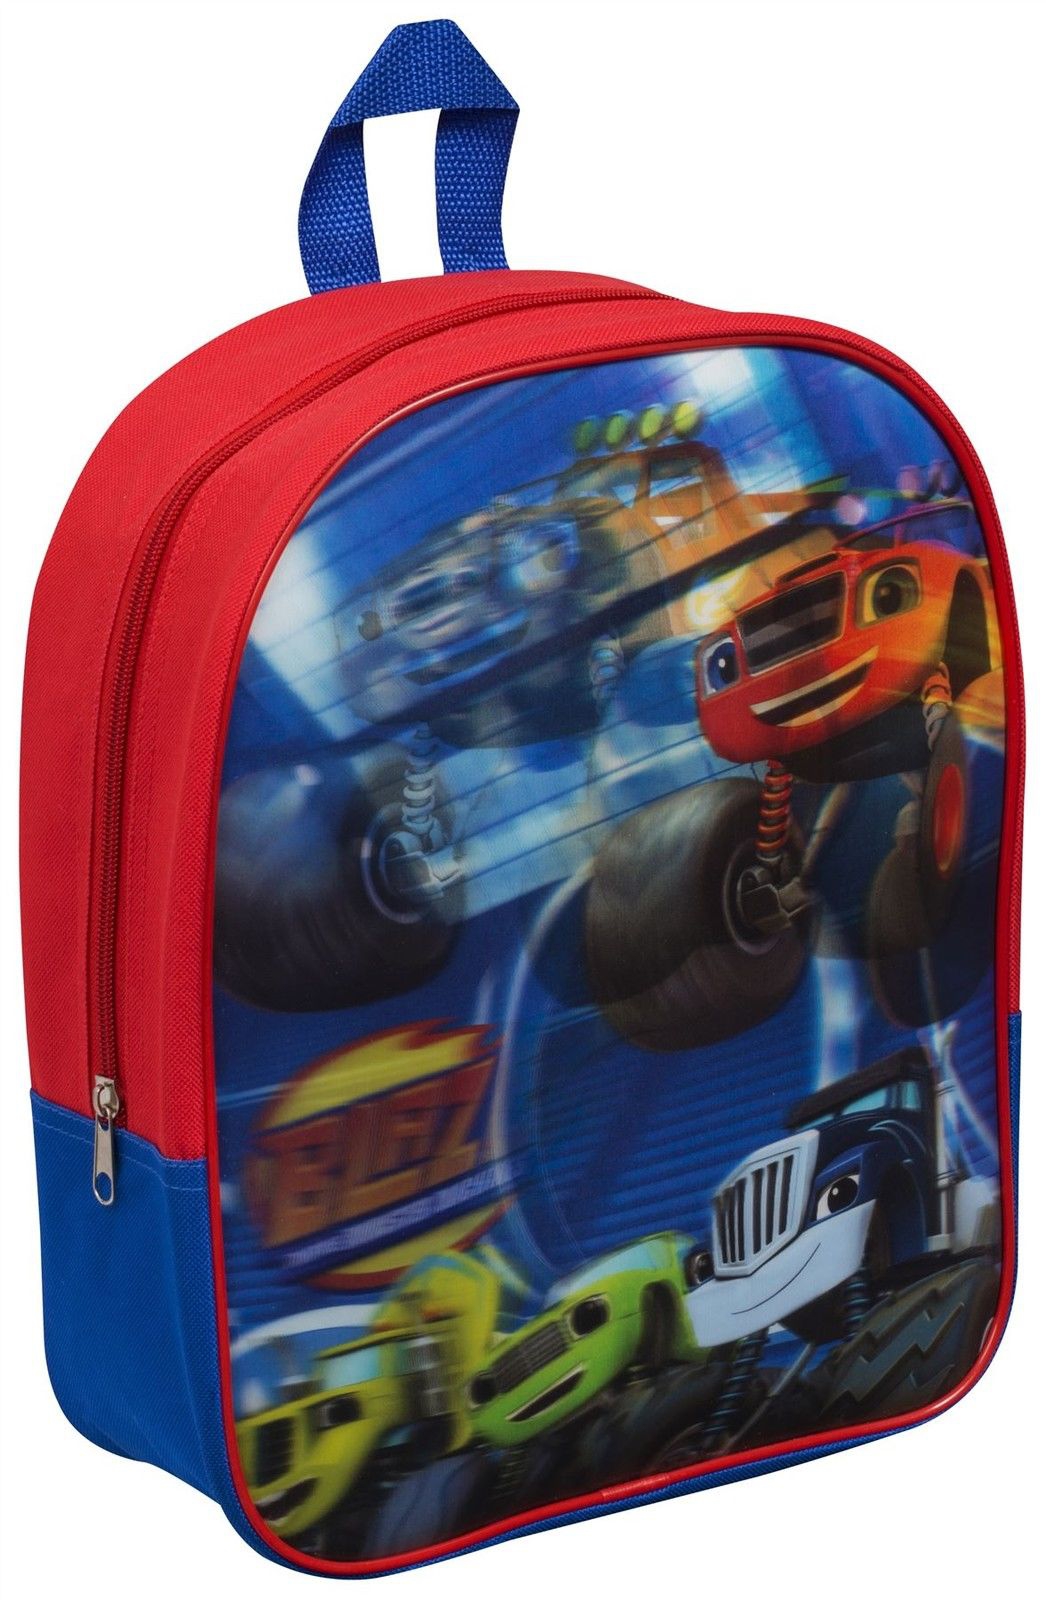 Blaze and The Monster Machines 'Lenticular' Junior School Bag Rucksack Backpack